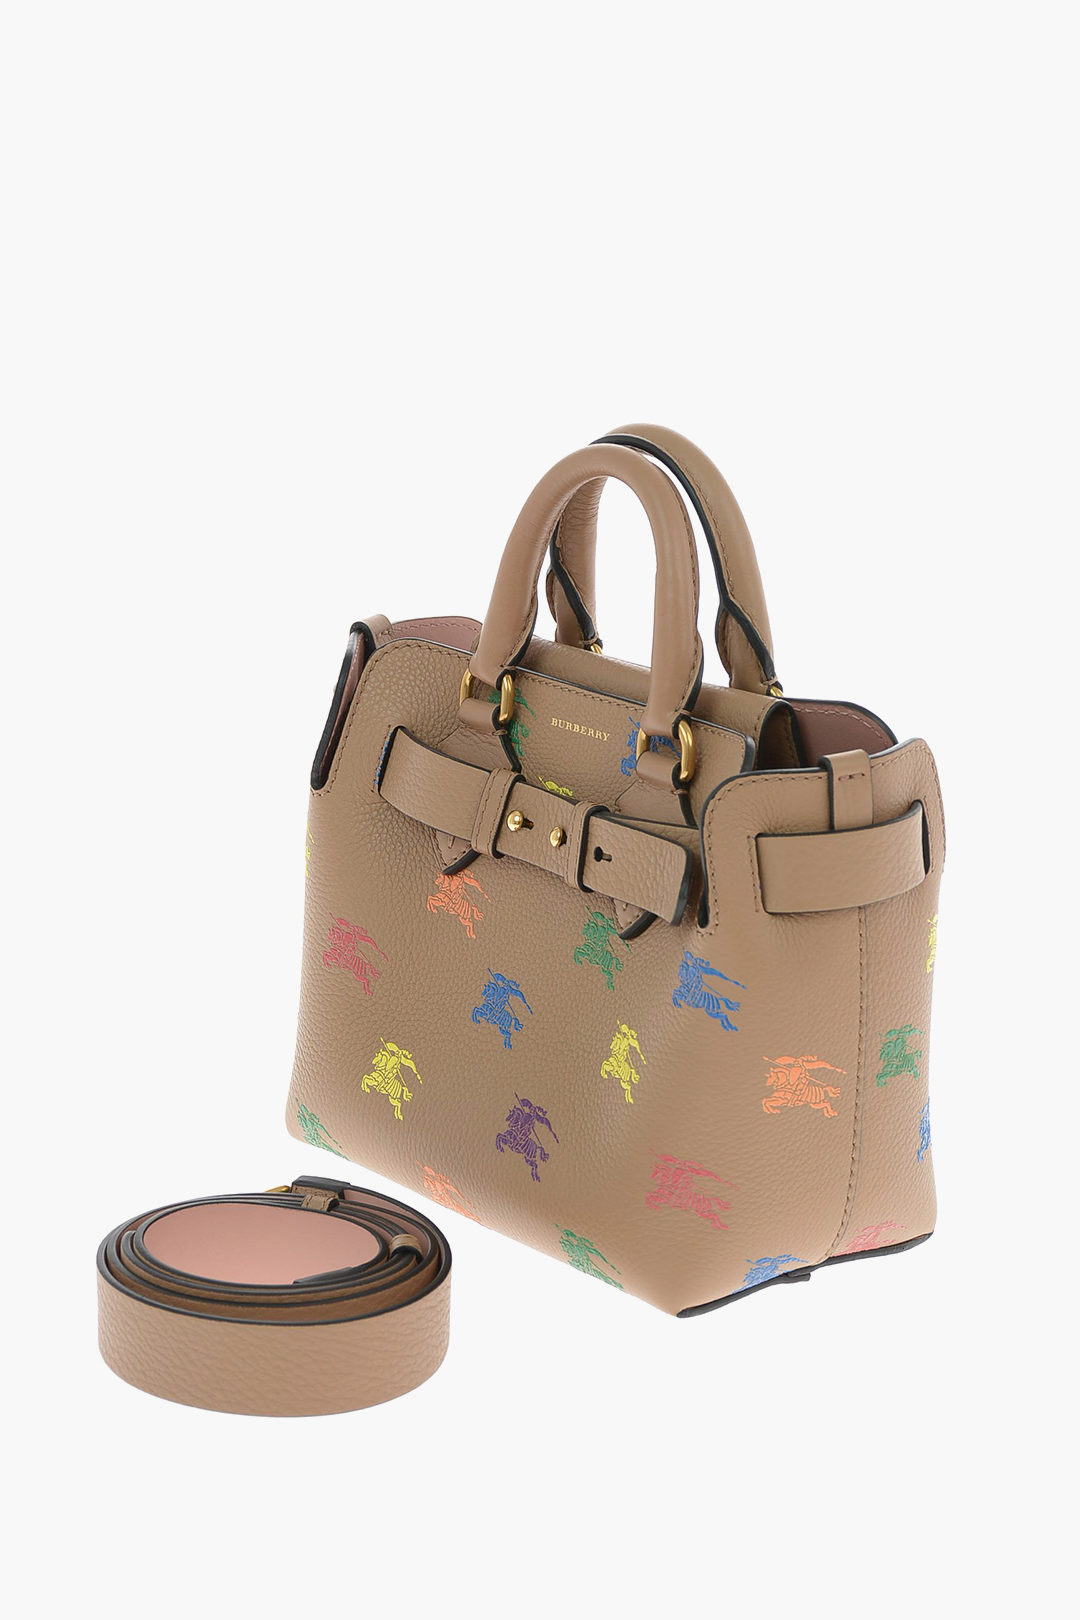 Burberry Ladies Rainbow Leather Belt Bag Strap 4080163 5045555949492 -  Handbags - Jomashop